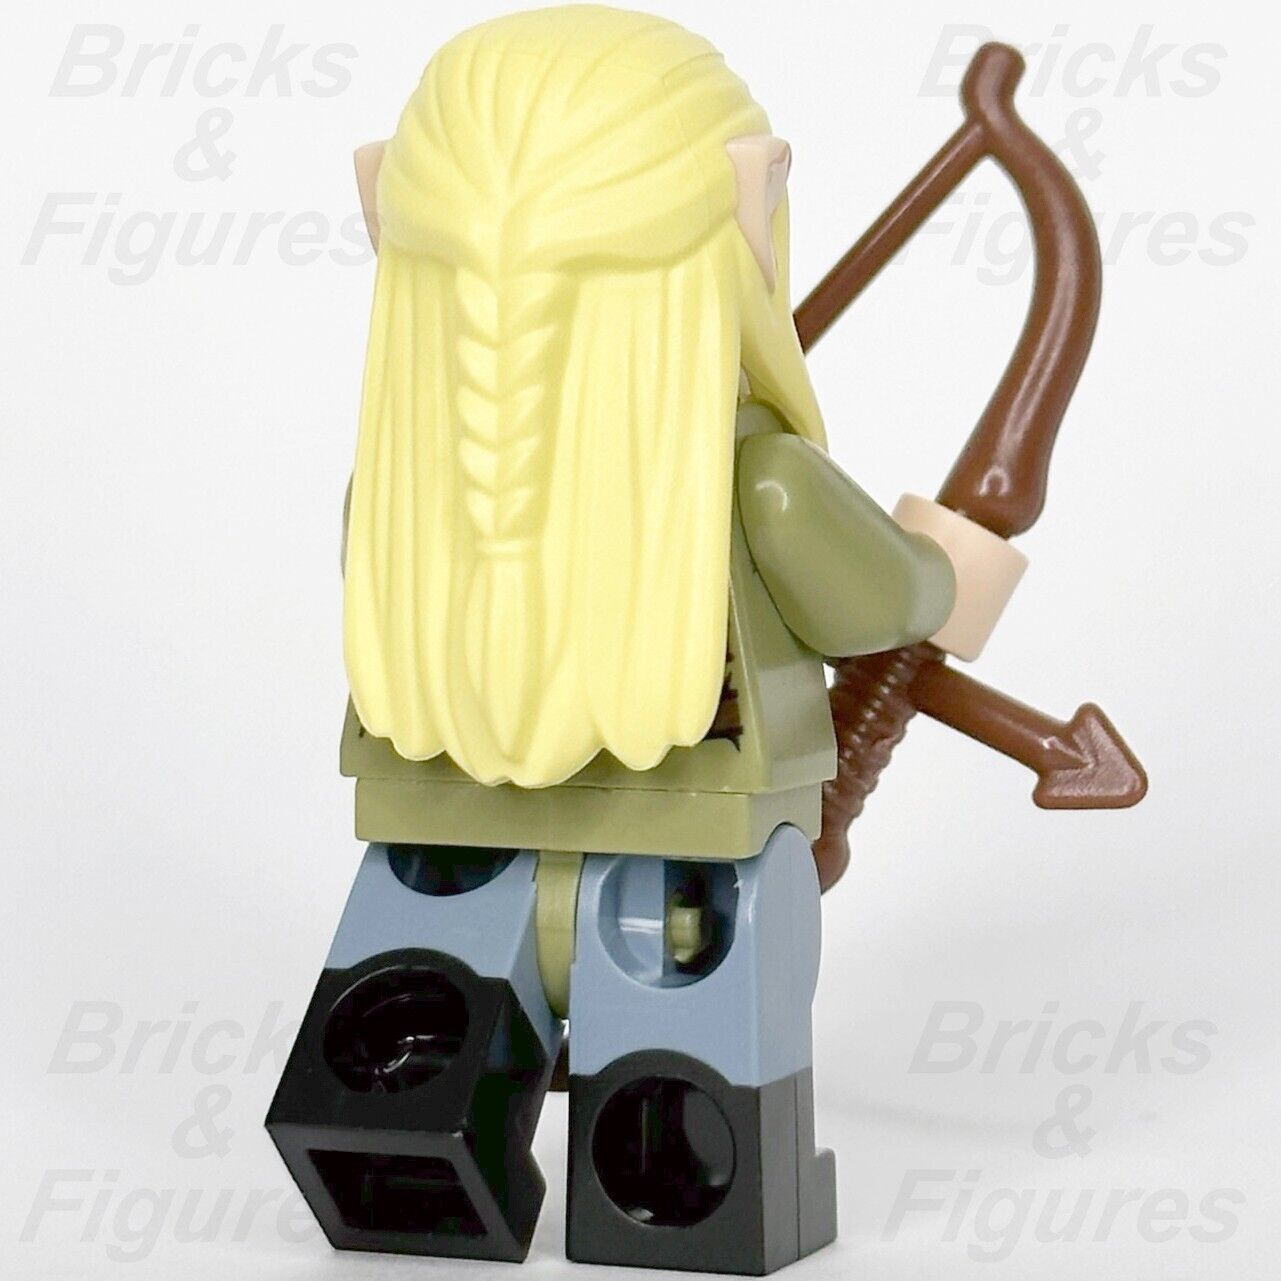 LEGO Legolas Minifigure The Hobbit & The Lord of the Rings Elf 10316 lor127 New - Bricks & Figures